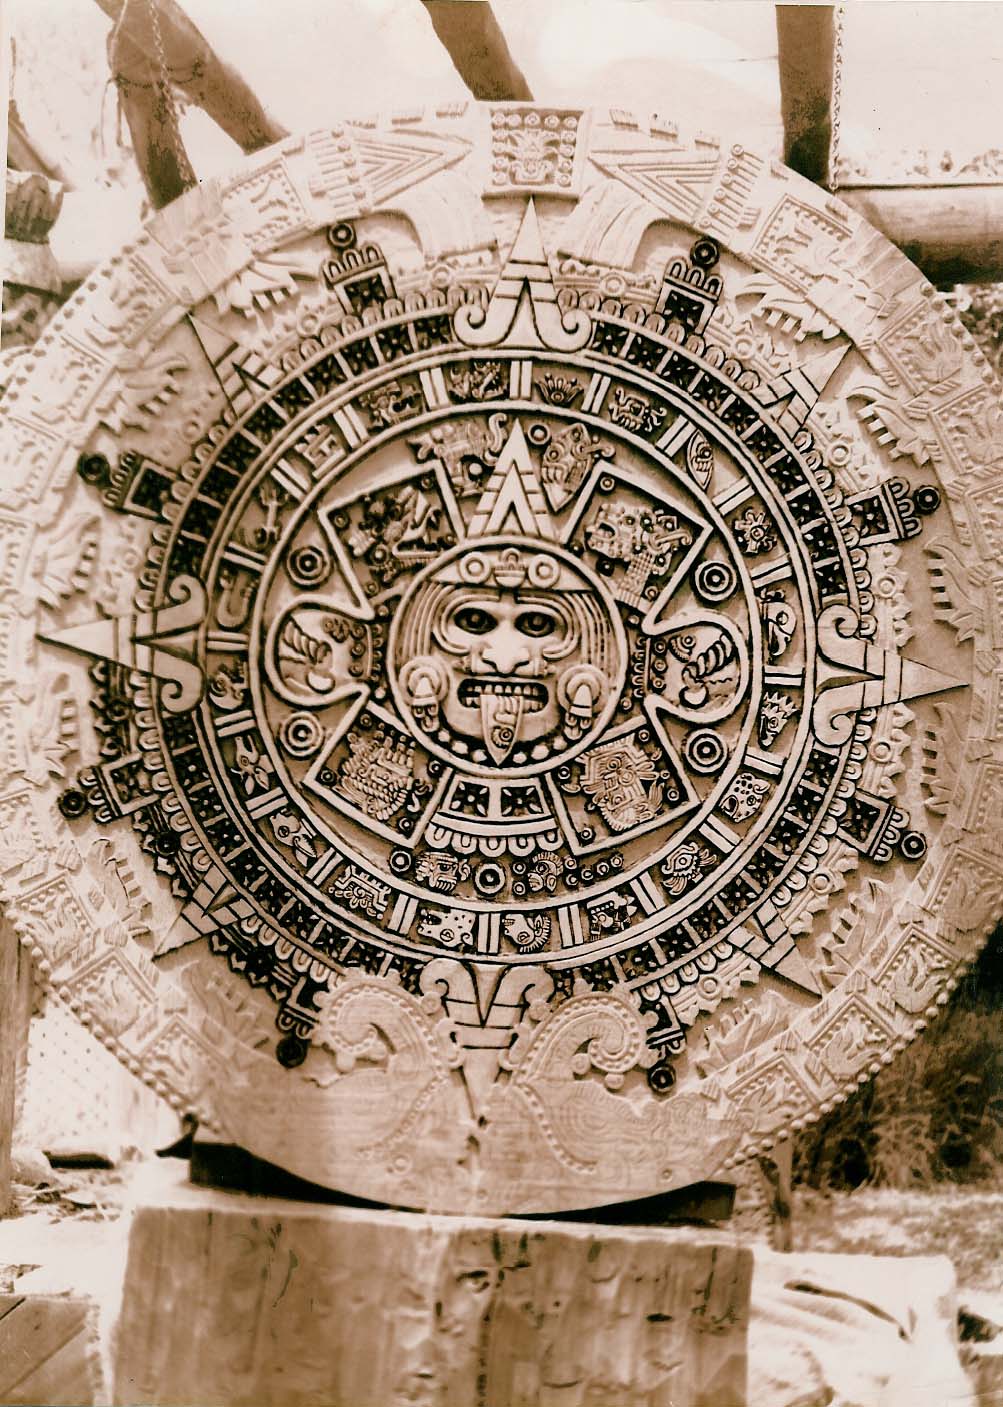 image For > Aztec Calendar Wallpaper